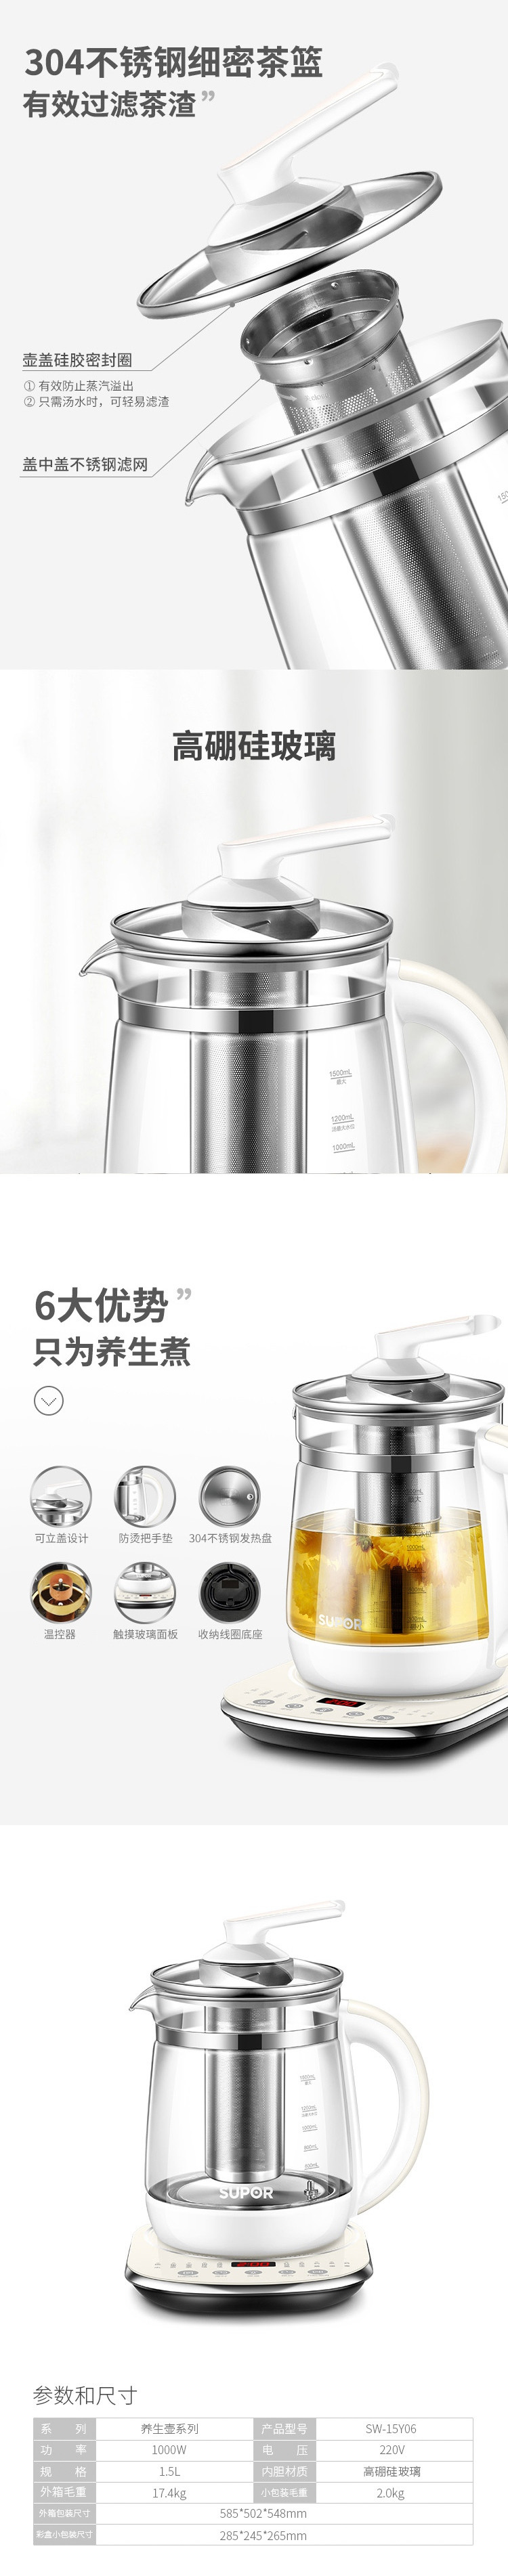 DL苏泊尔 养生壶SW-15Y06 煮茶壶玻璃电水壶烧水壶炖煮两用壶多功能 1.5L